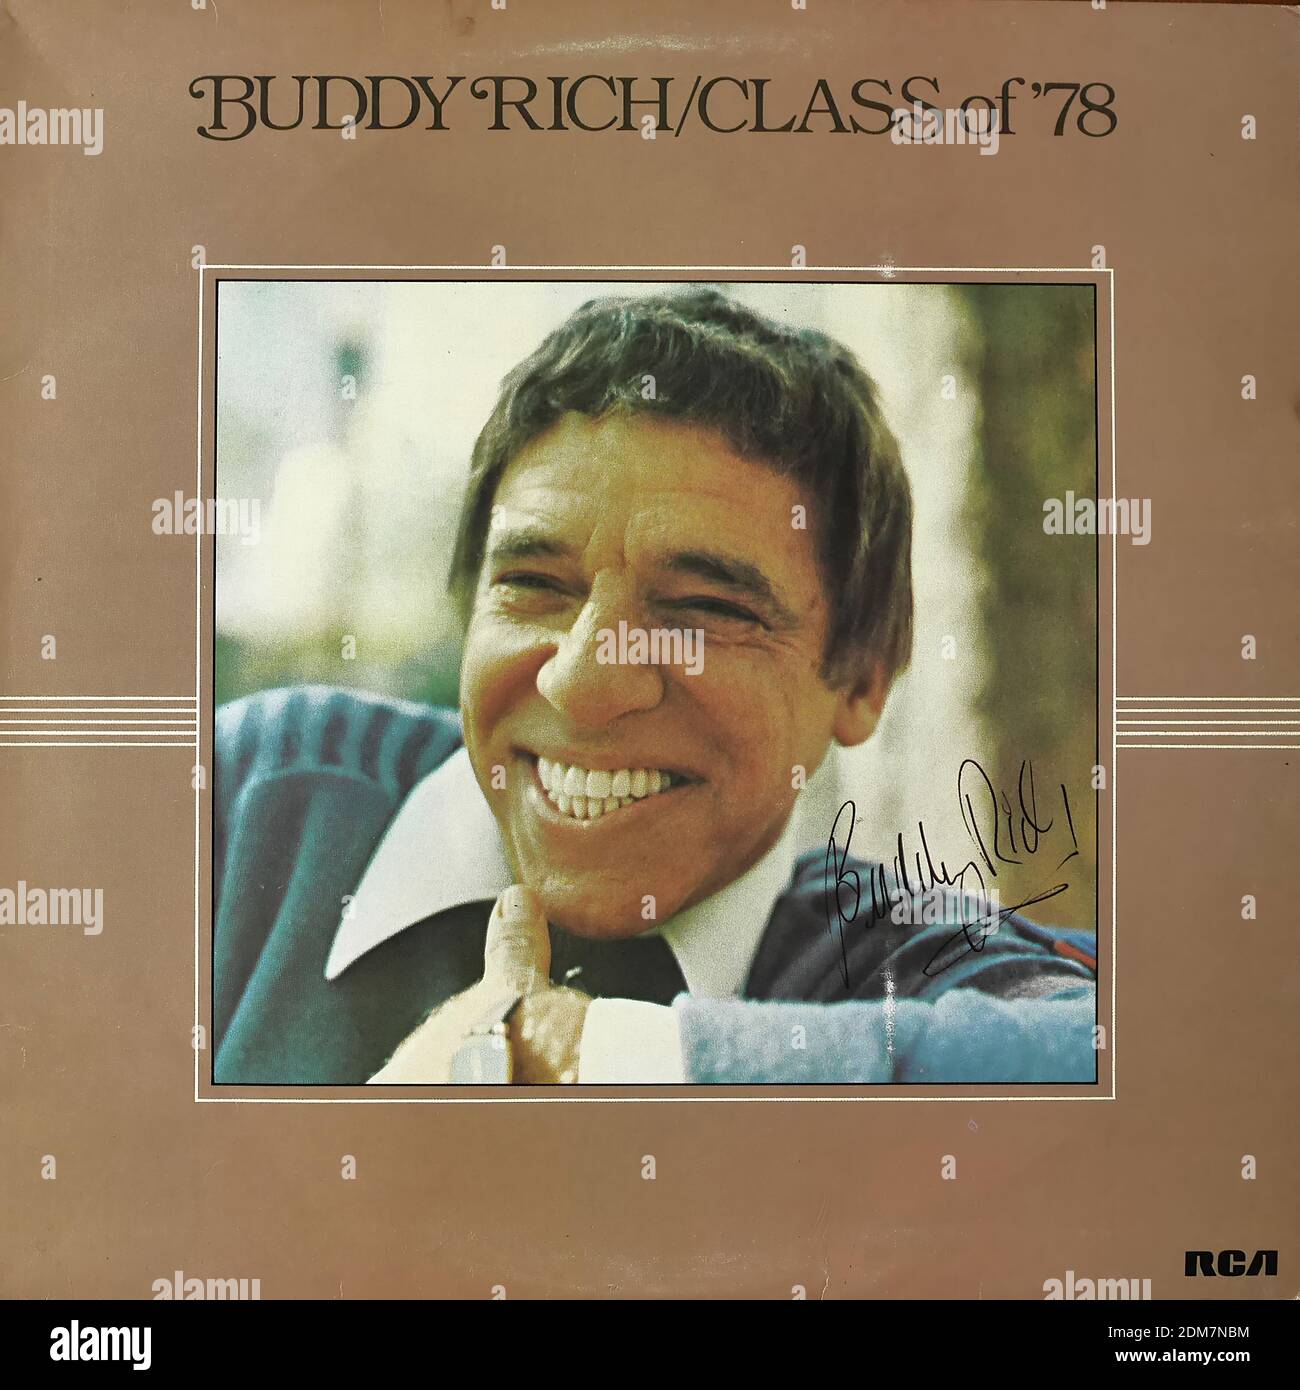 Buddy Rich - Class of '78, Gryphon RCA PL 25164, 1977 - Vintage Vinyl Album Cover Stockfoto